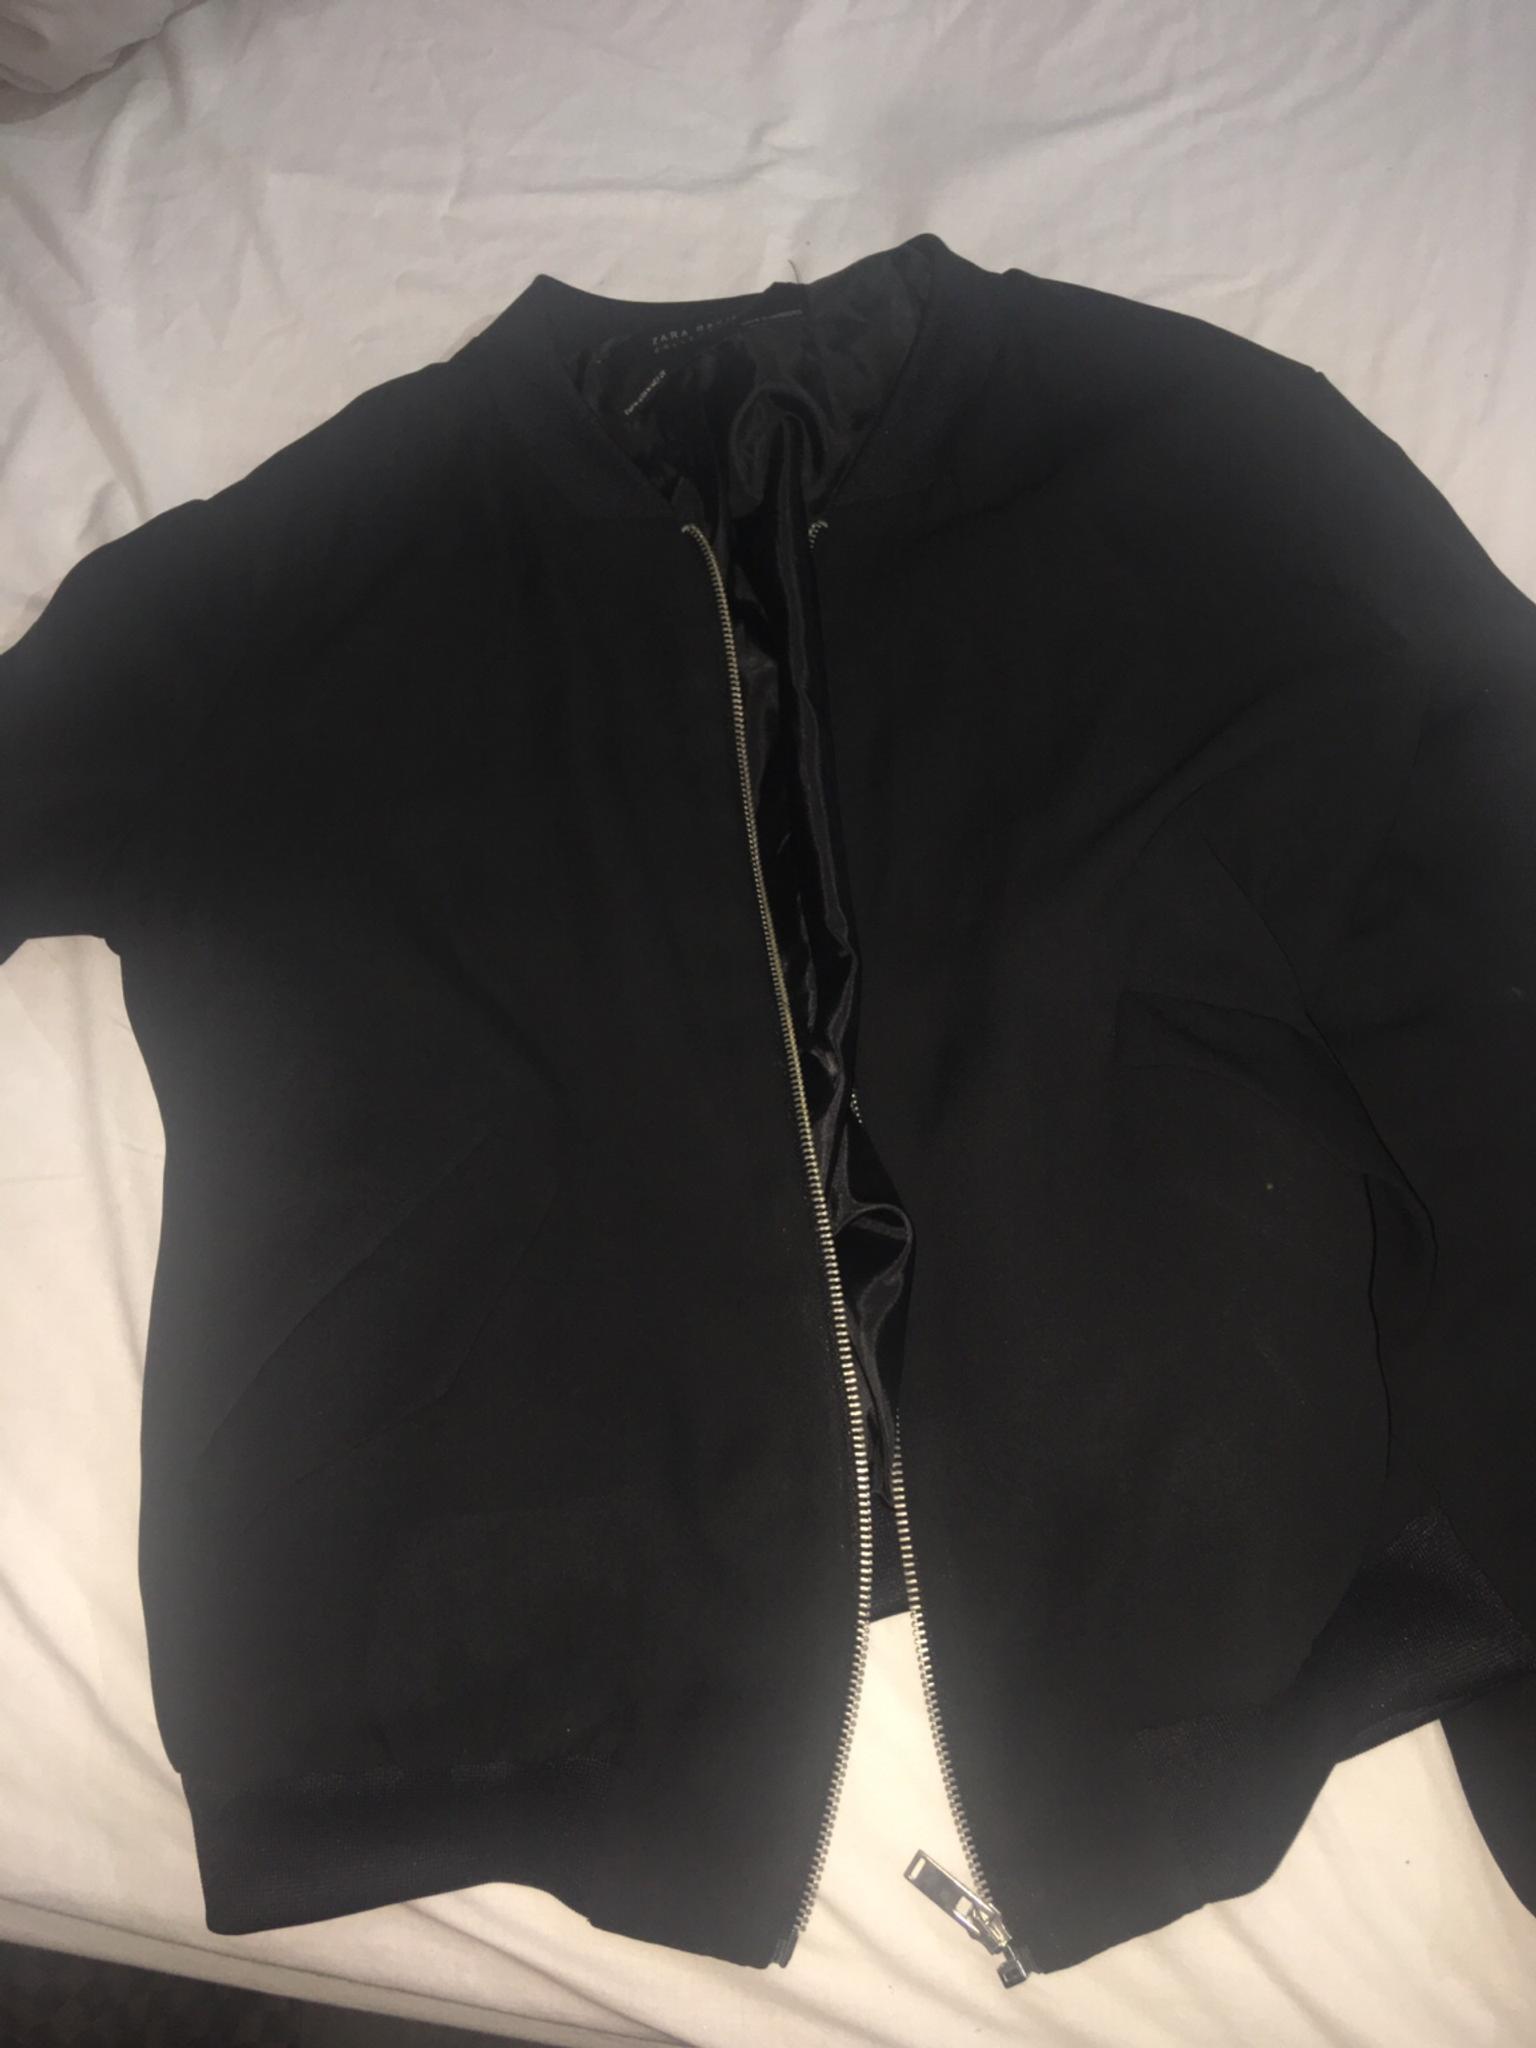 Basic Zara bomber jacket in a soft 